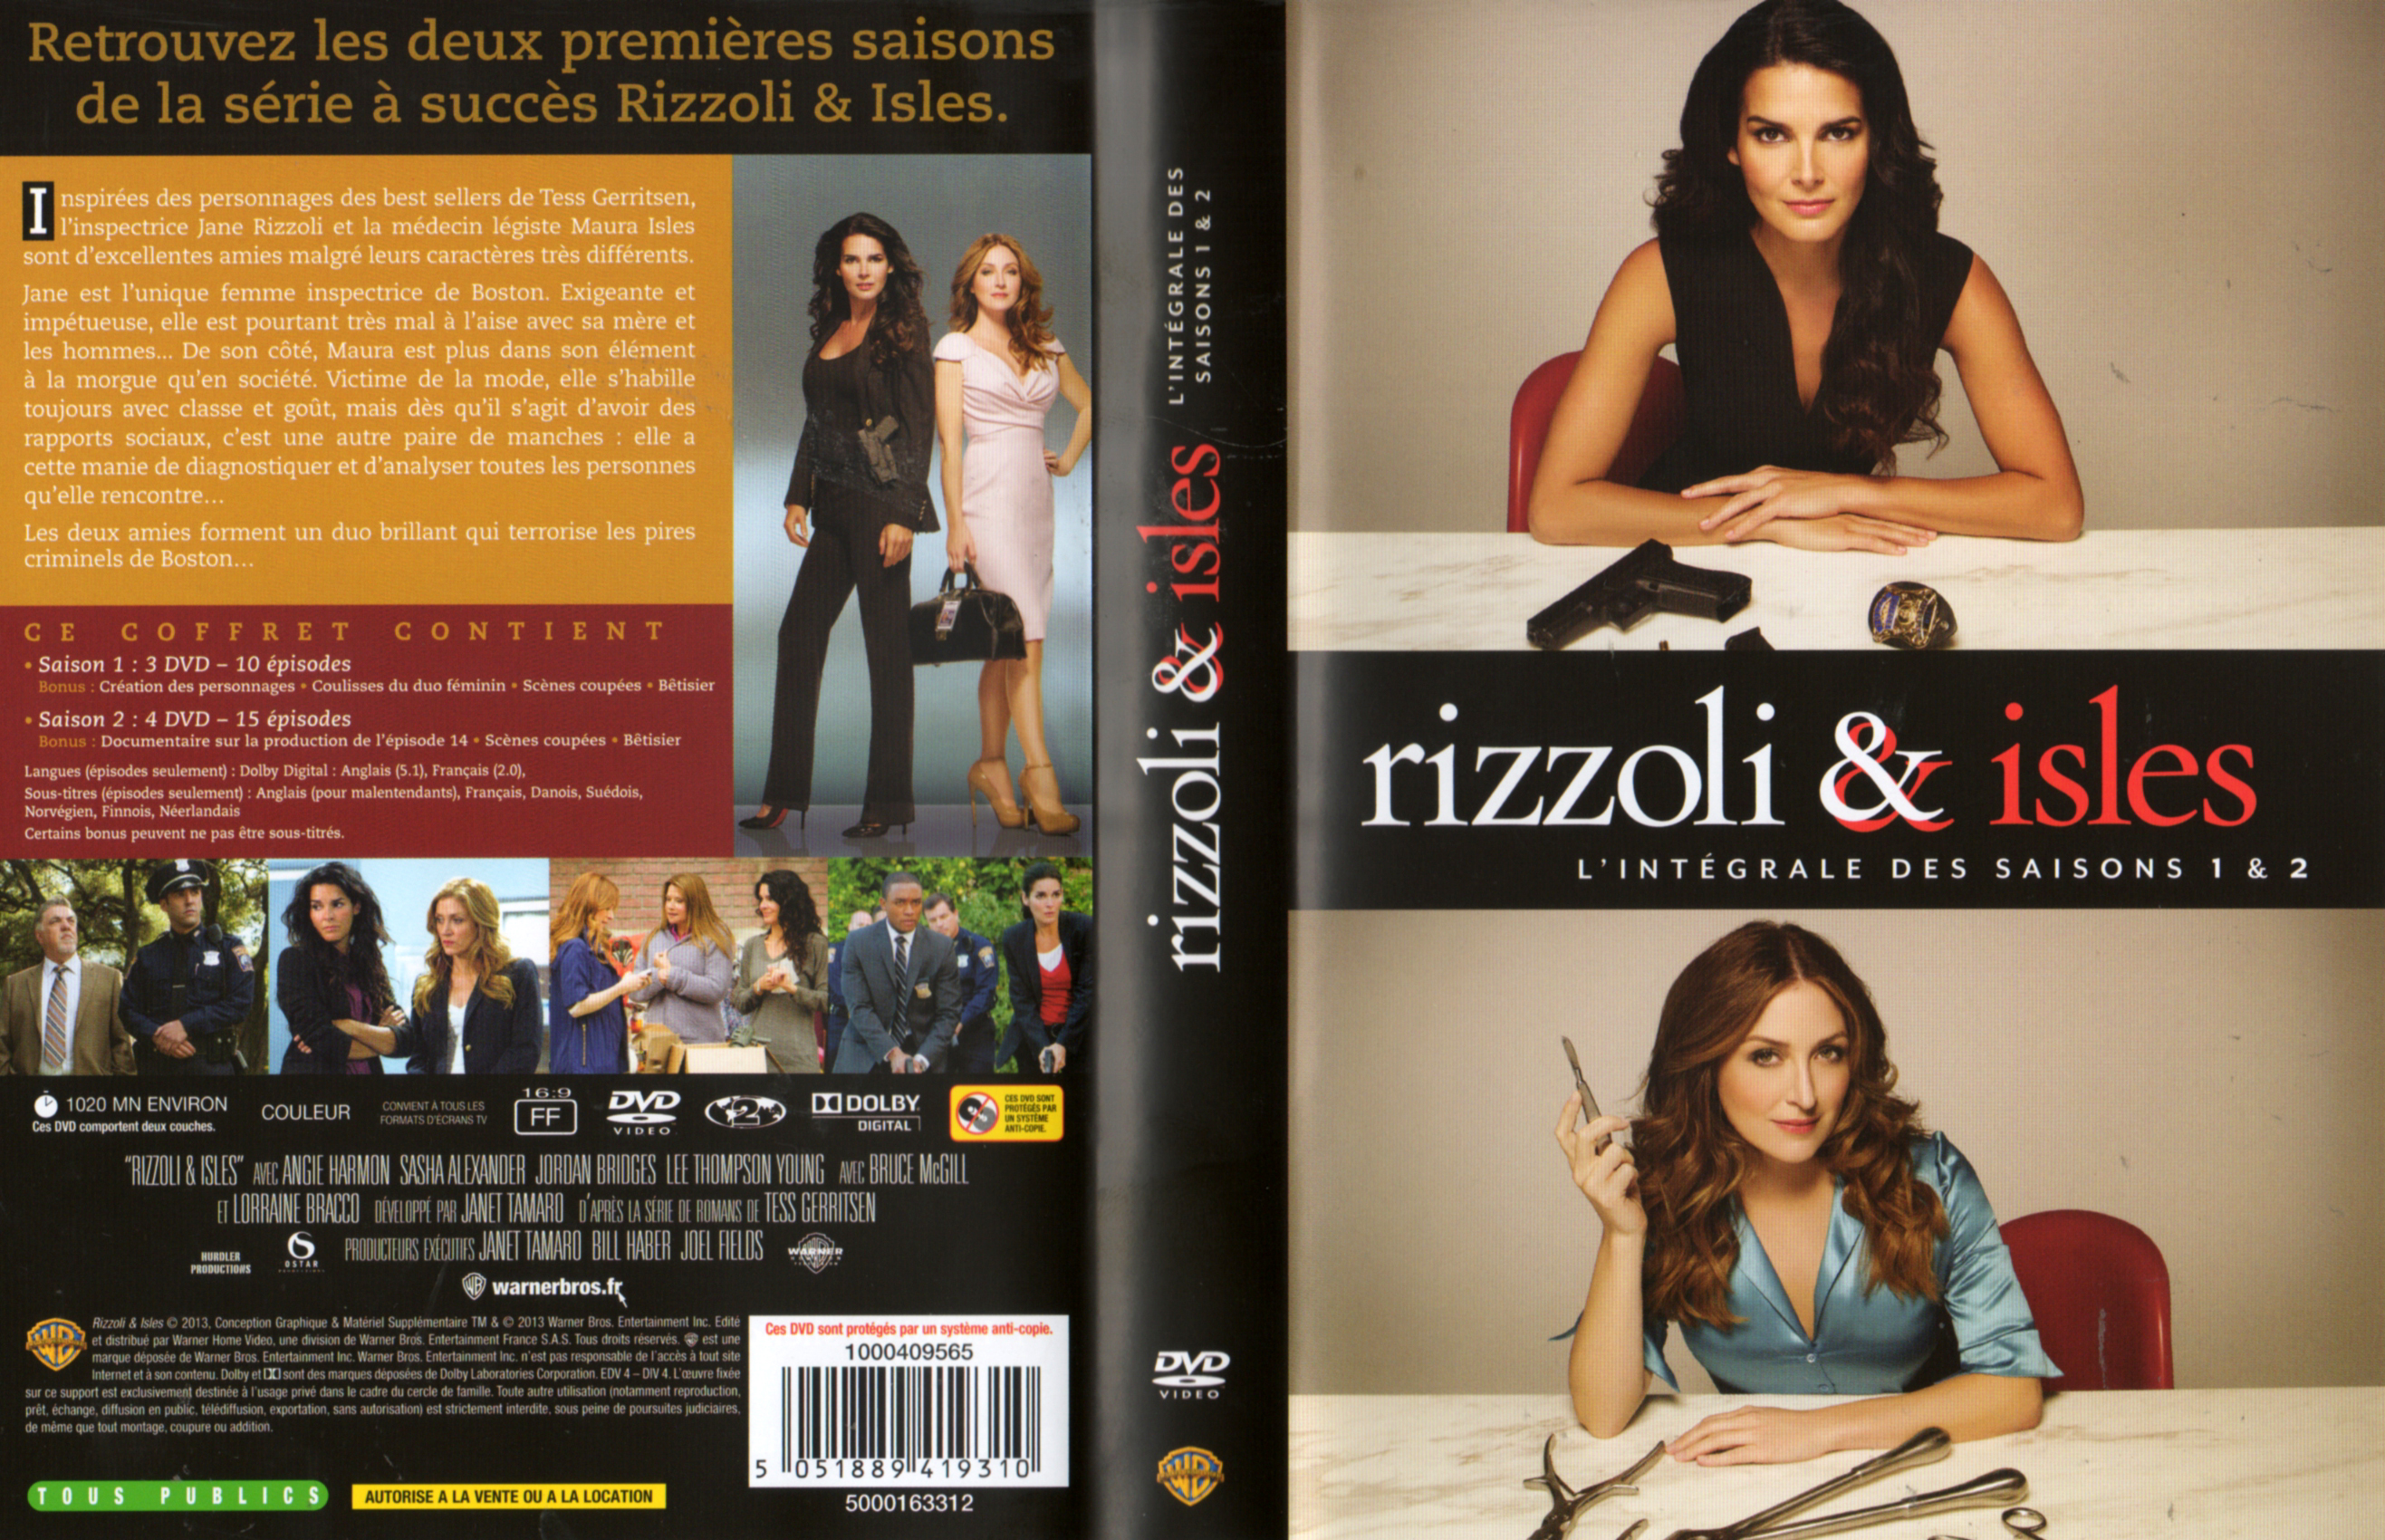 Jaquette DVD Rizzoli & Isles Saison 1 et 2